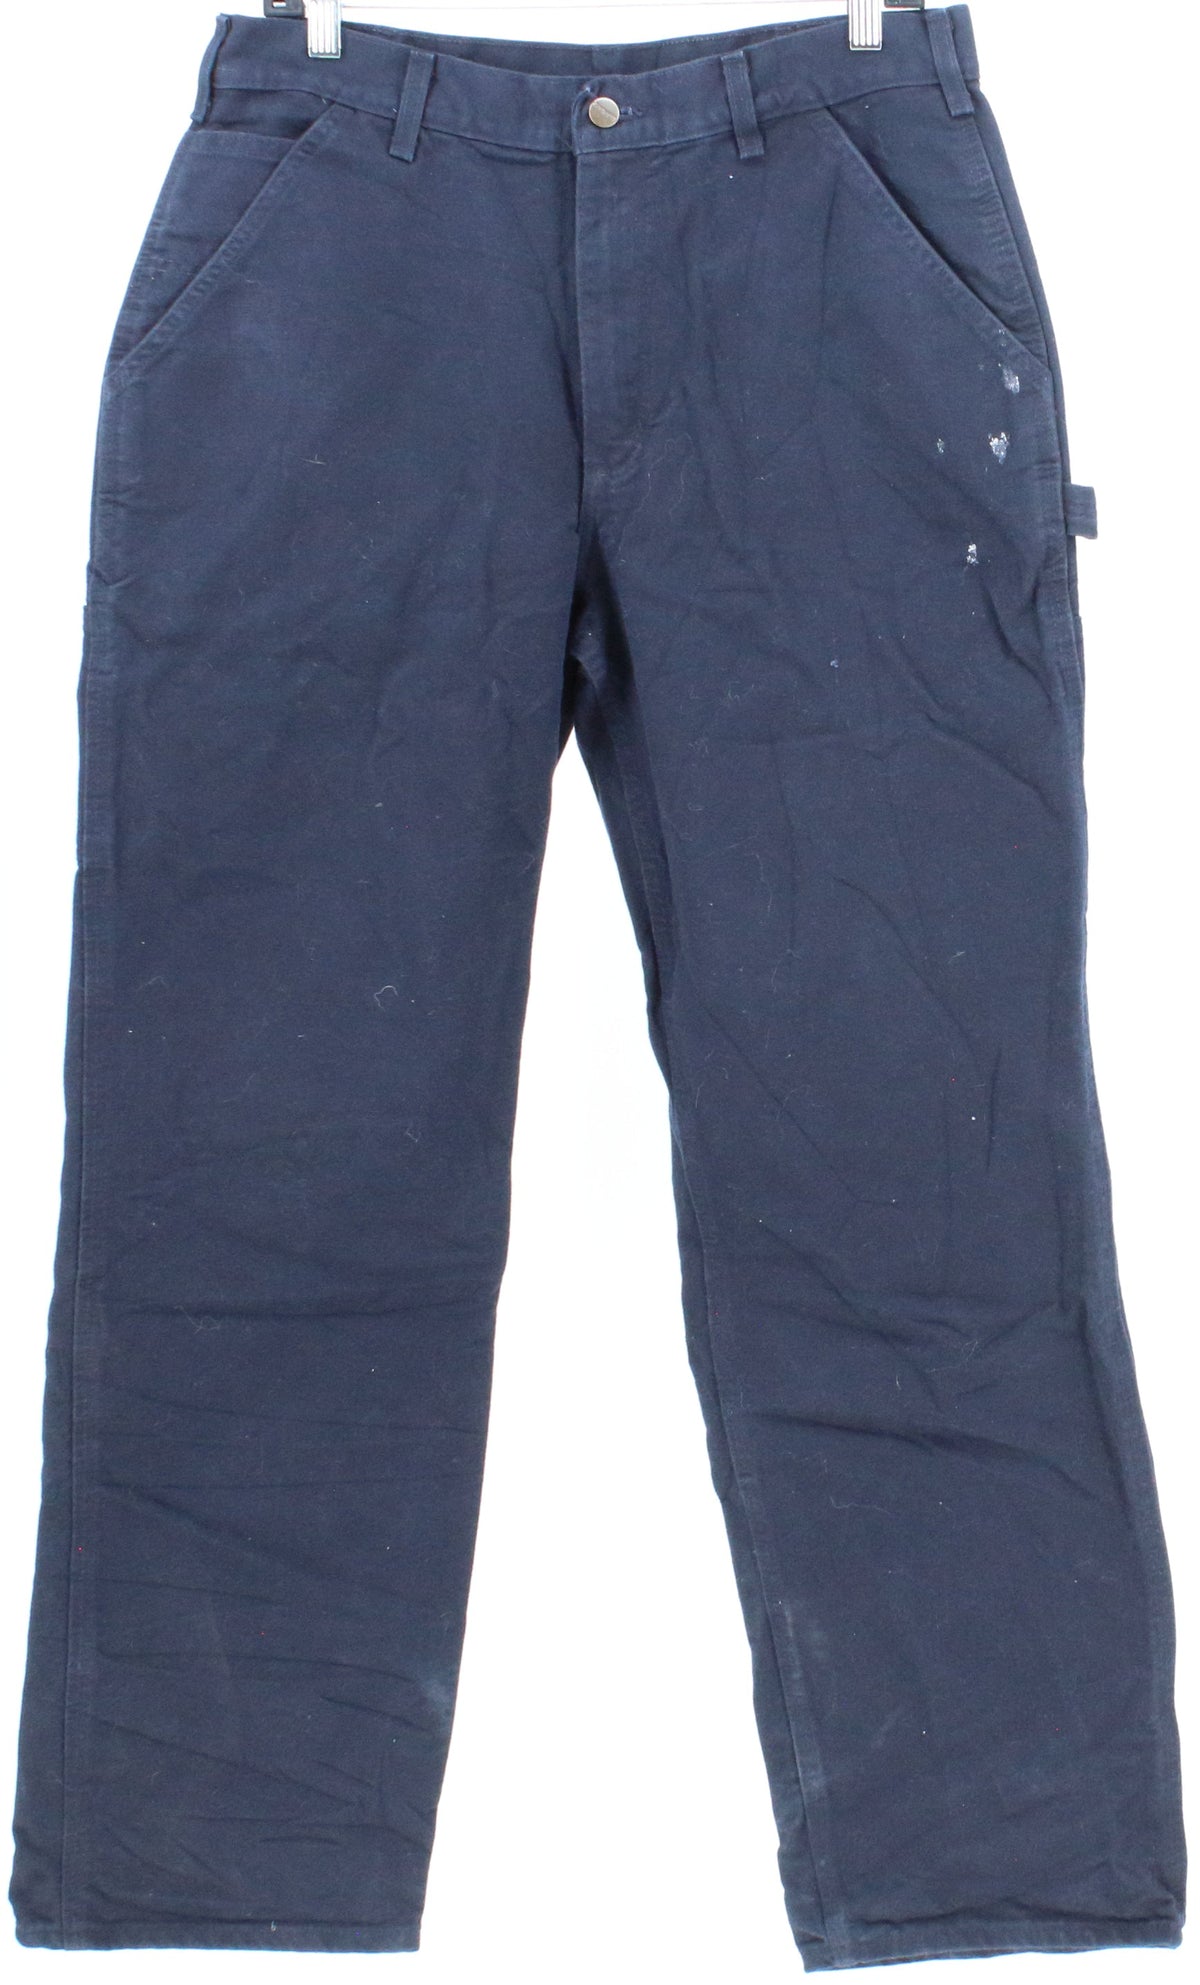 Carhartt Loose Original Fit Navy Blue Cargo Pants